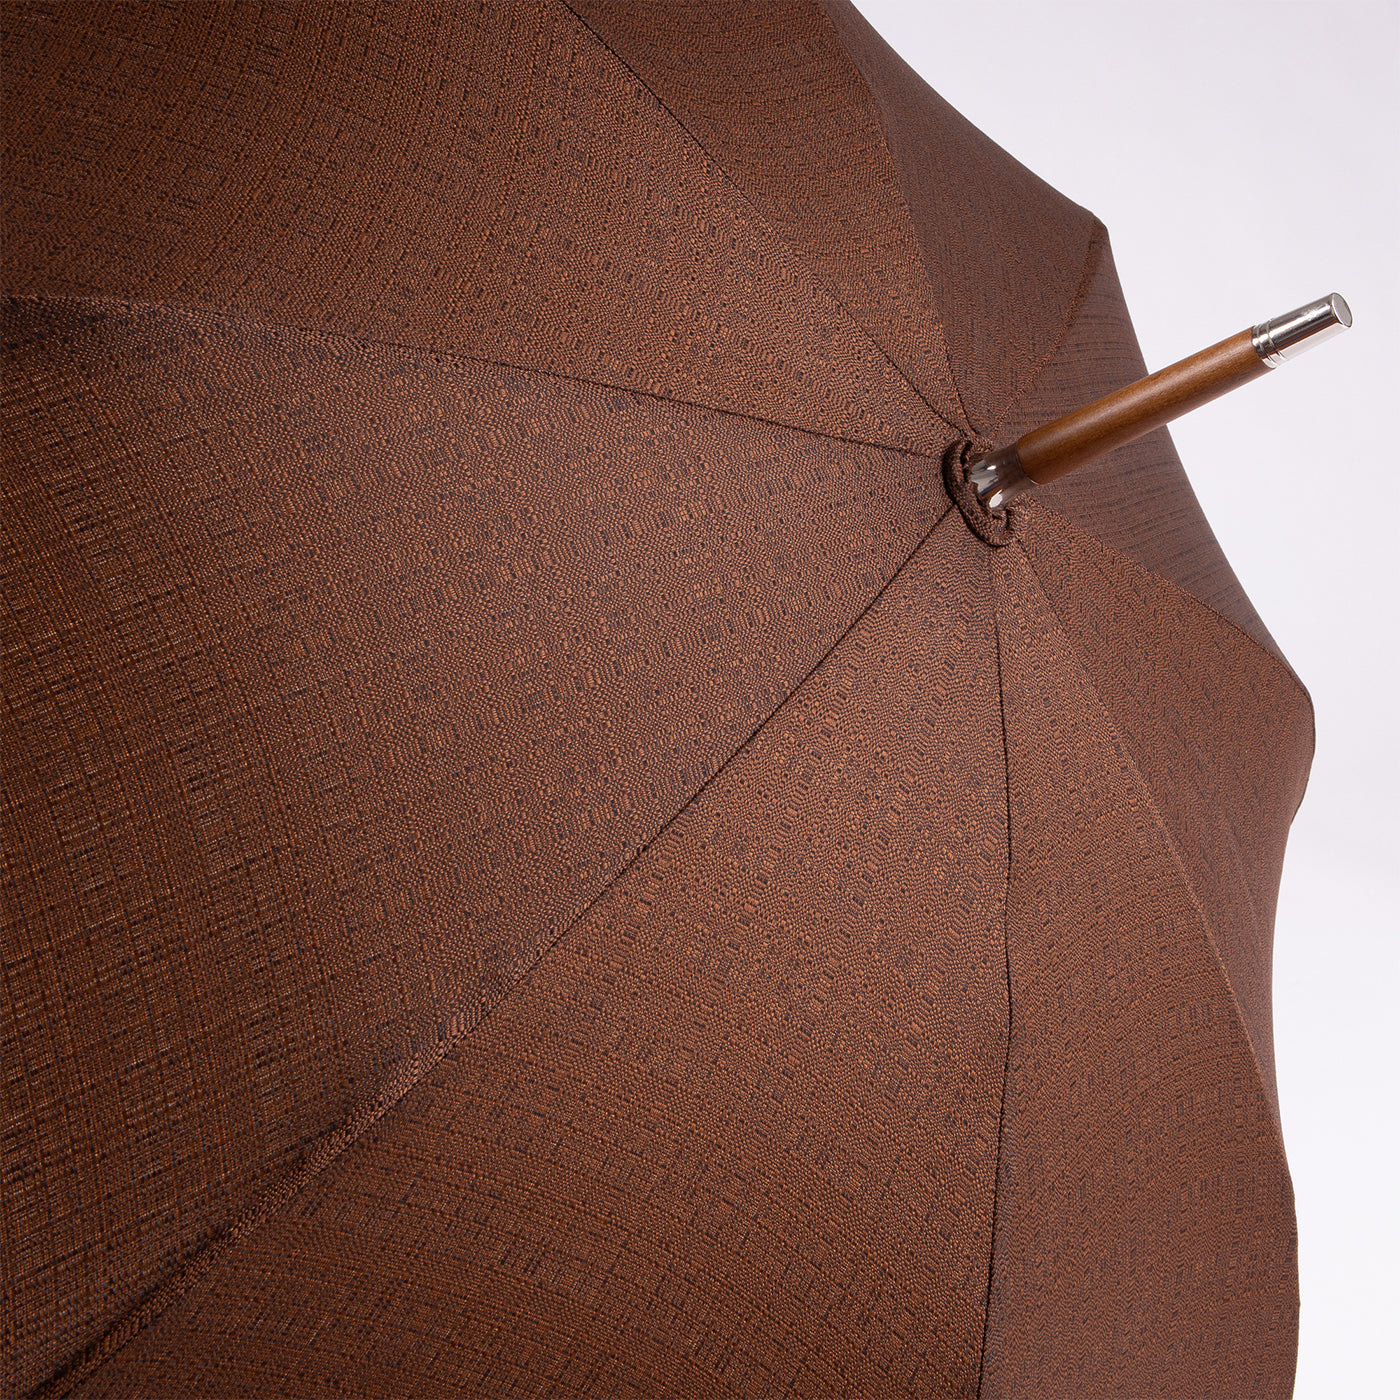 Paraguas marrón para señoras - Vista alternativa 1